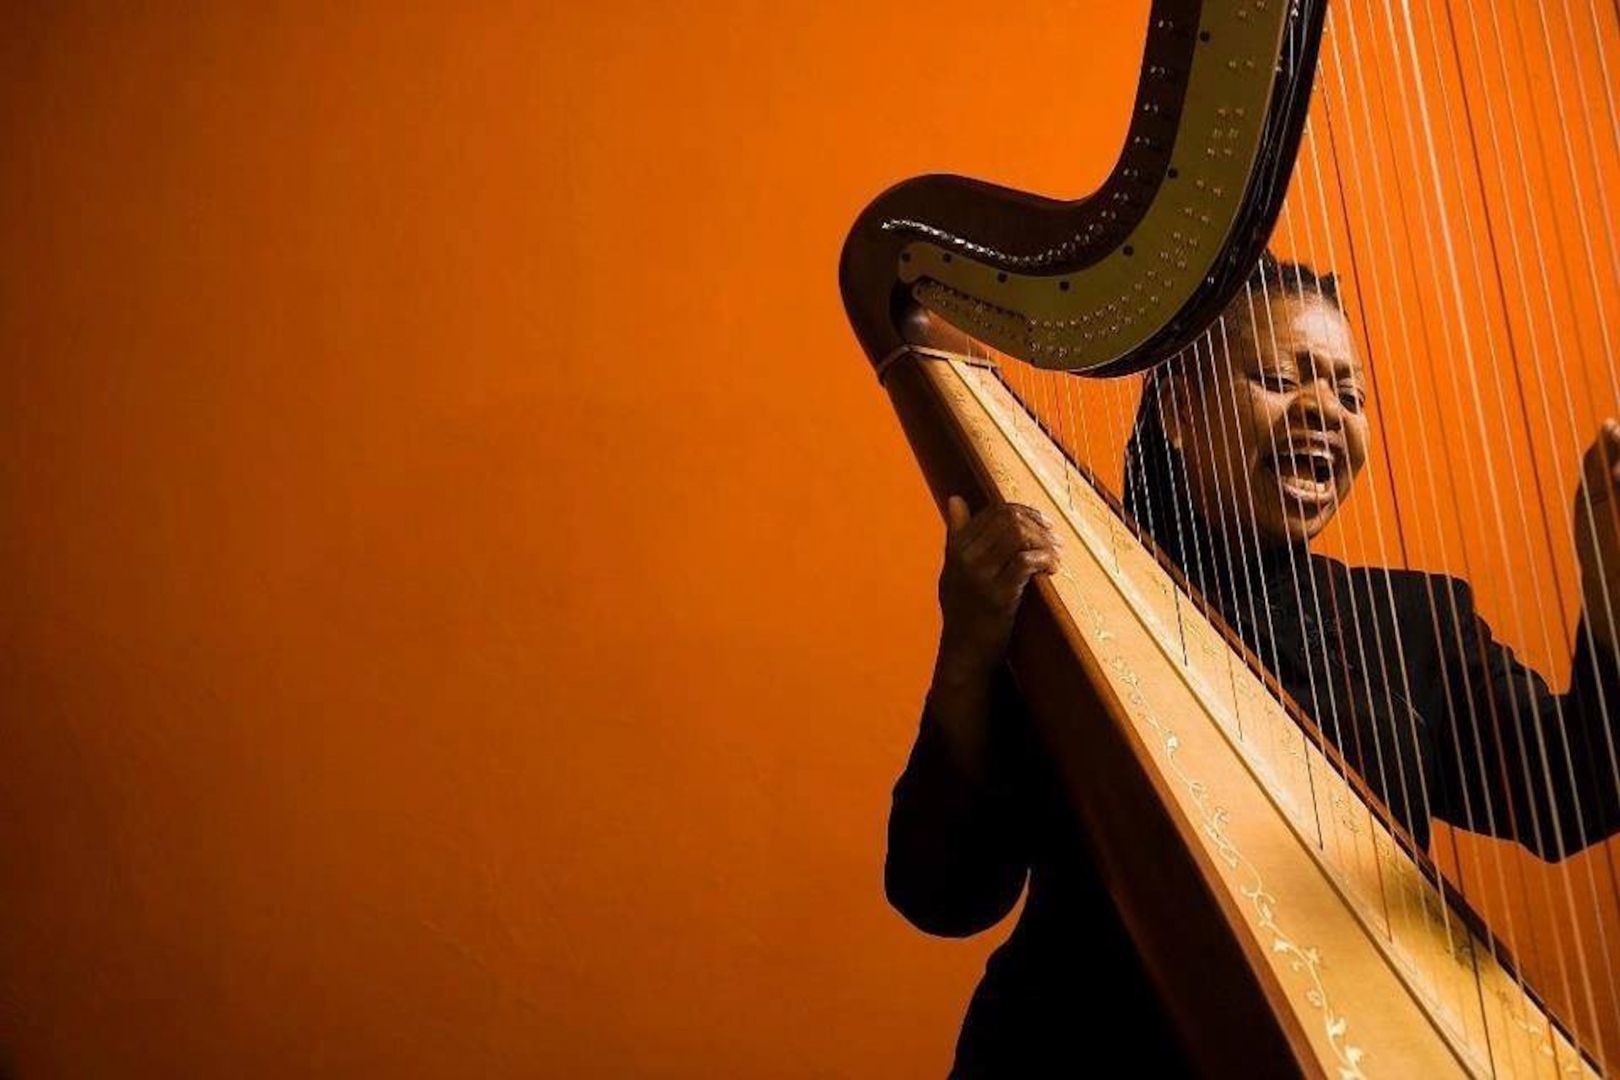 Destiny Muhammad playing harp on an orange background